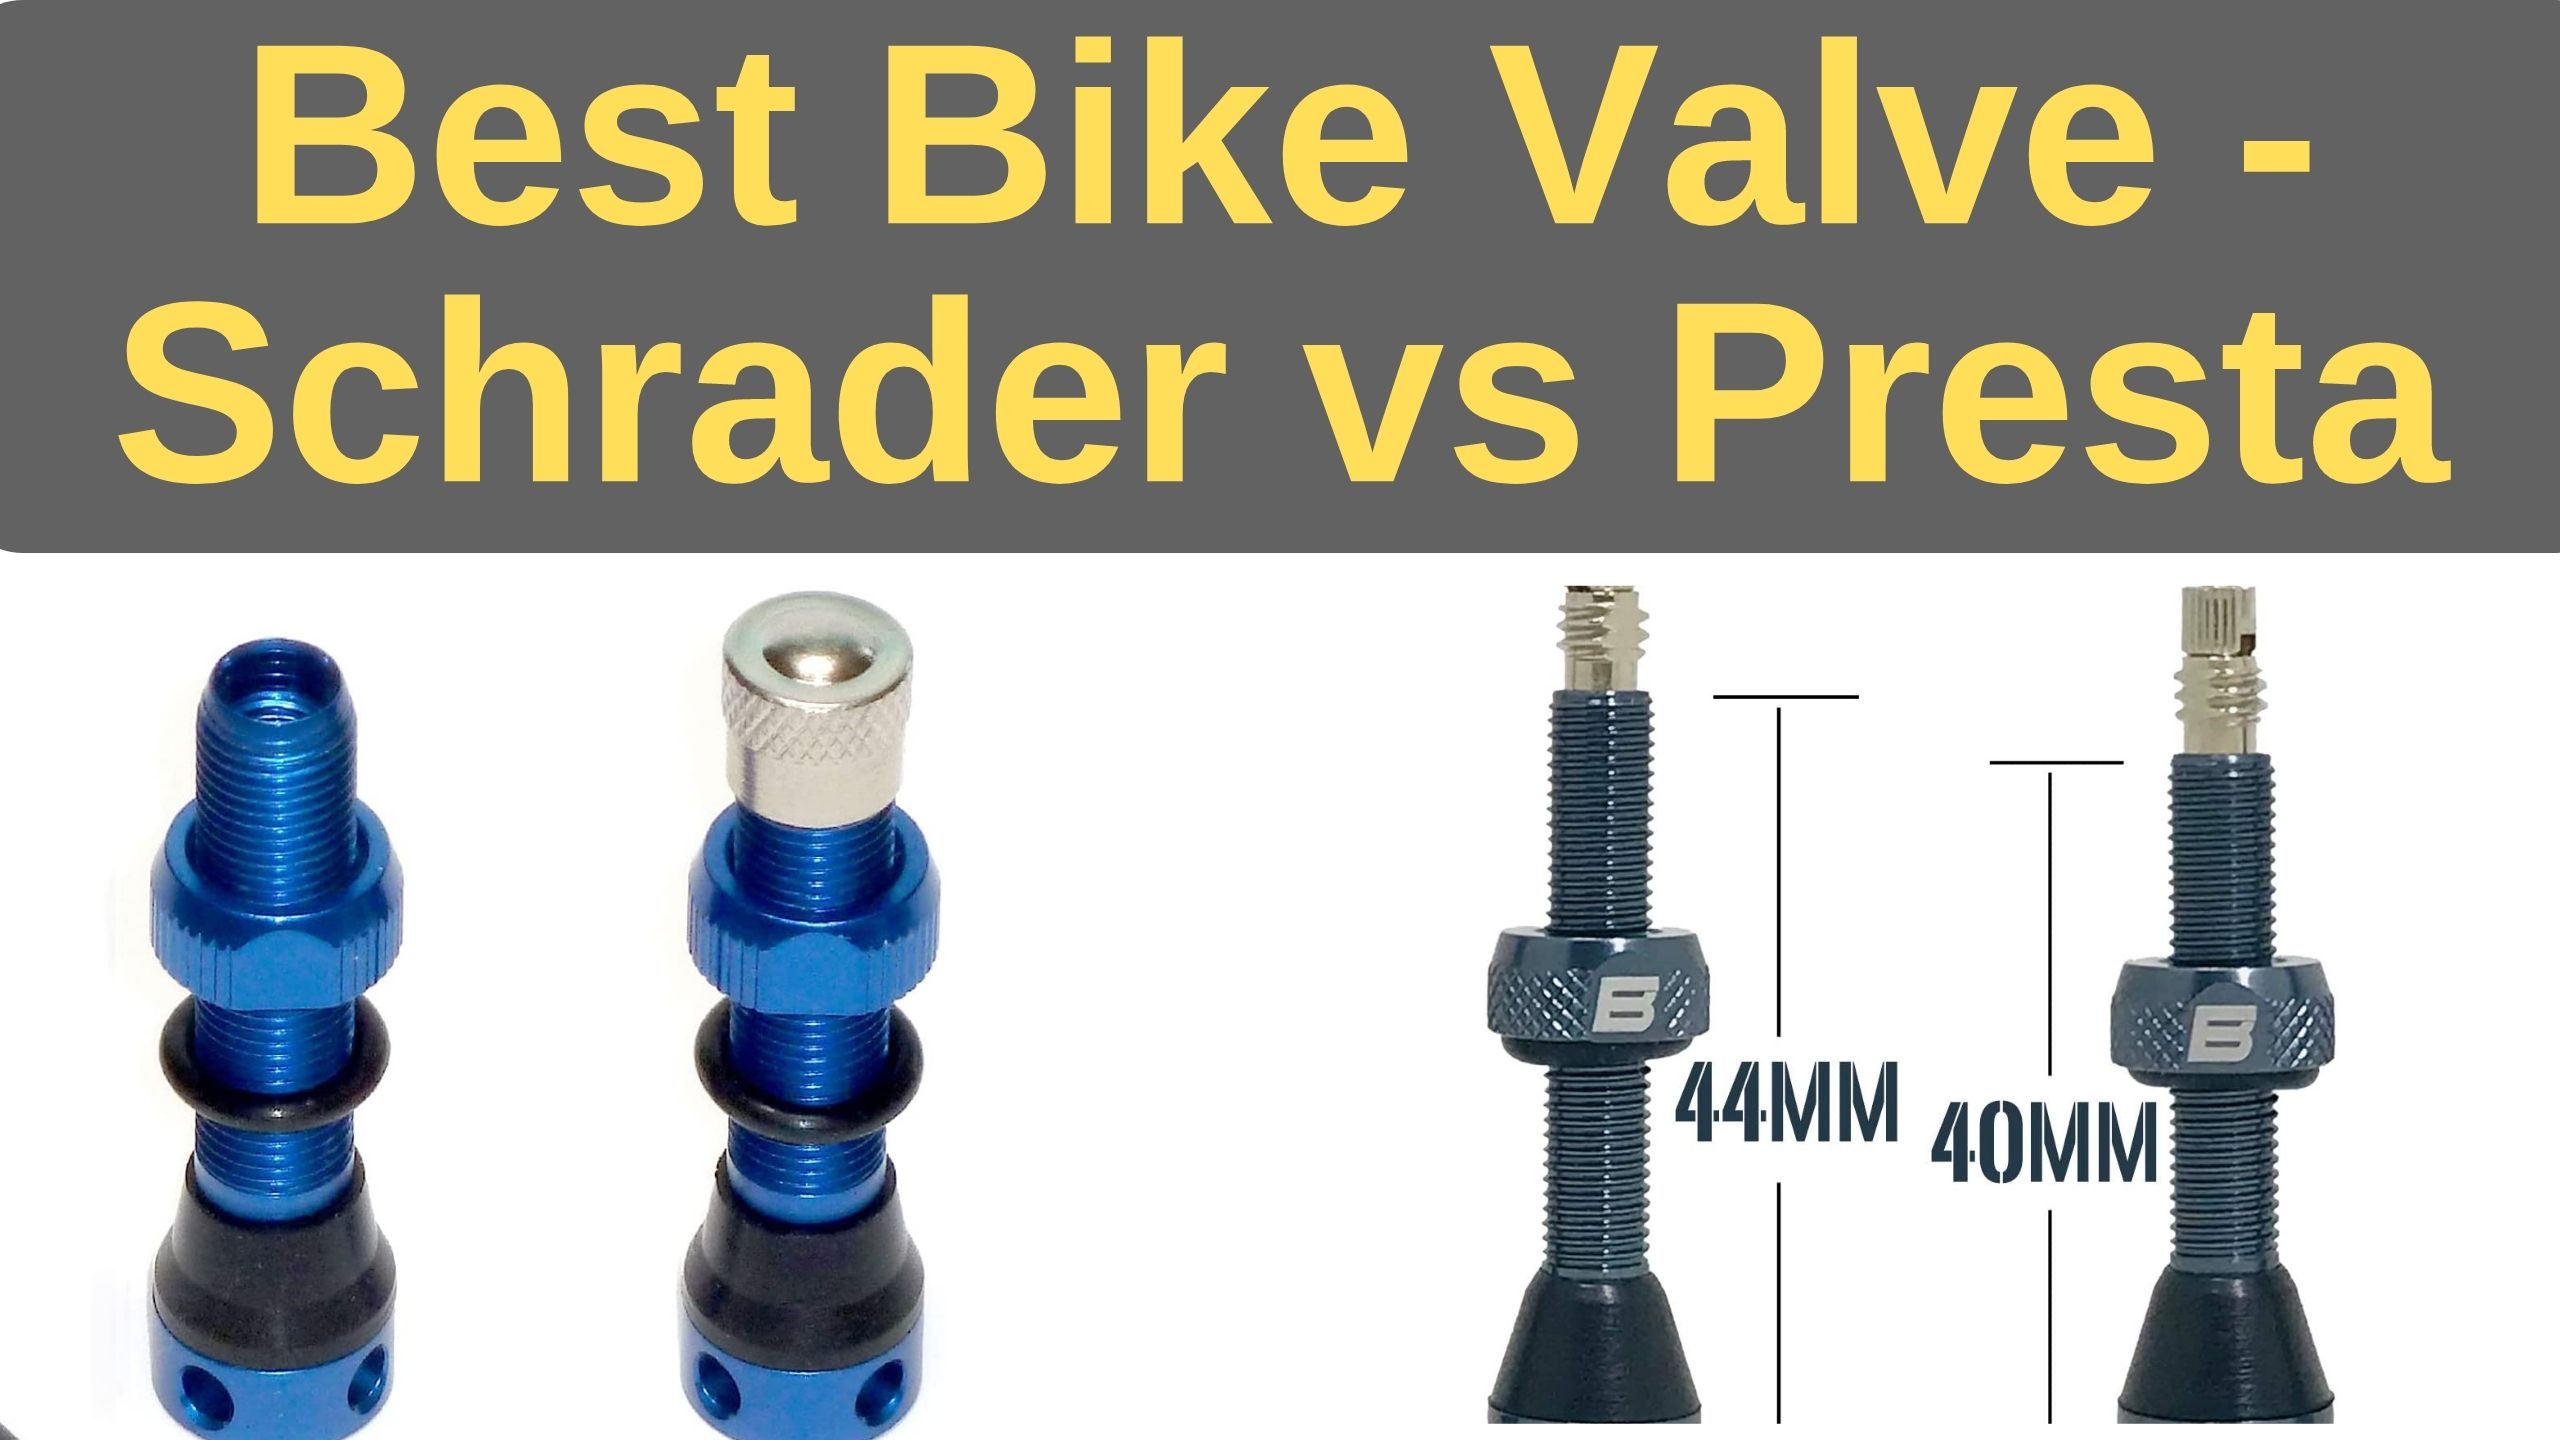 Best Bike Valve Schrader vs Presta